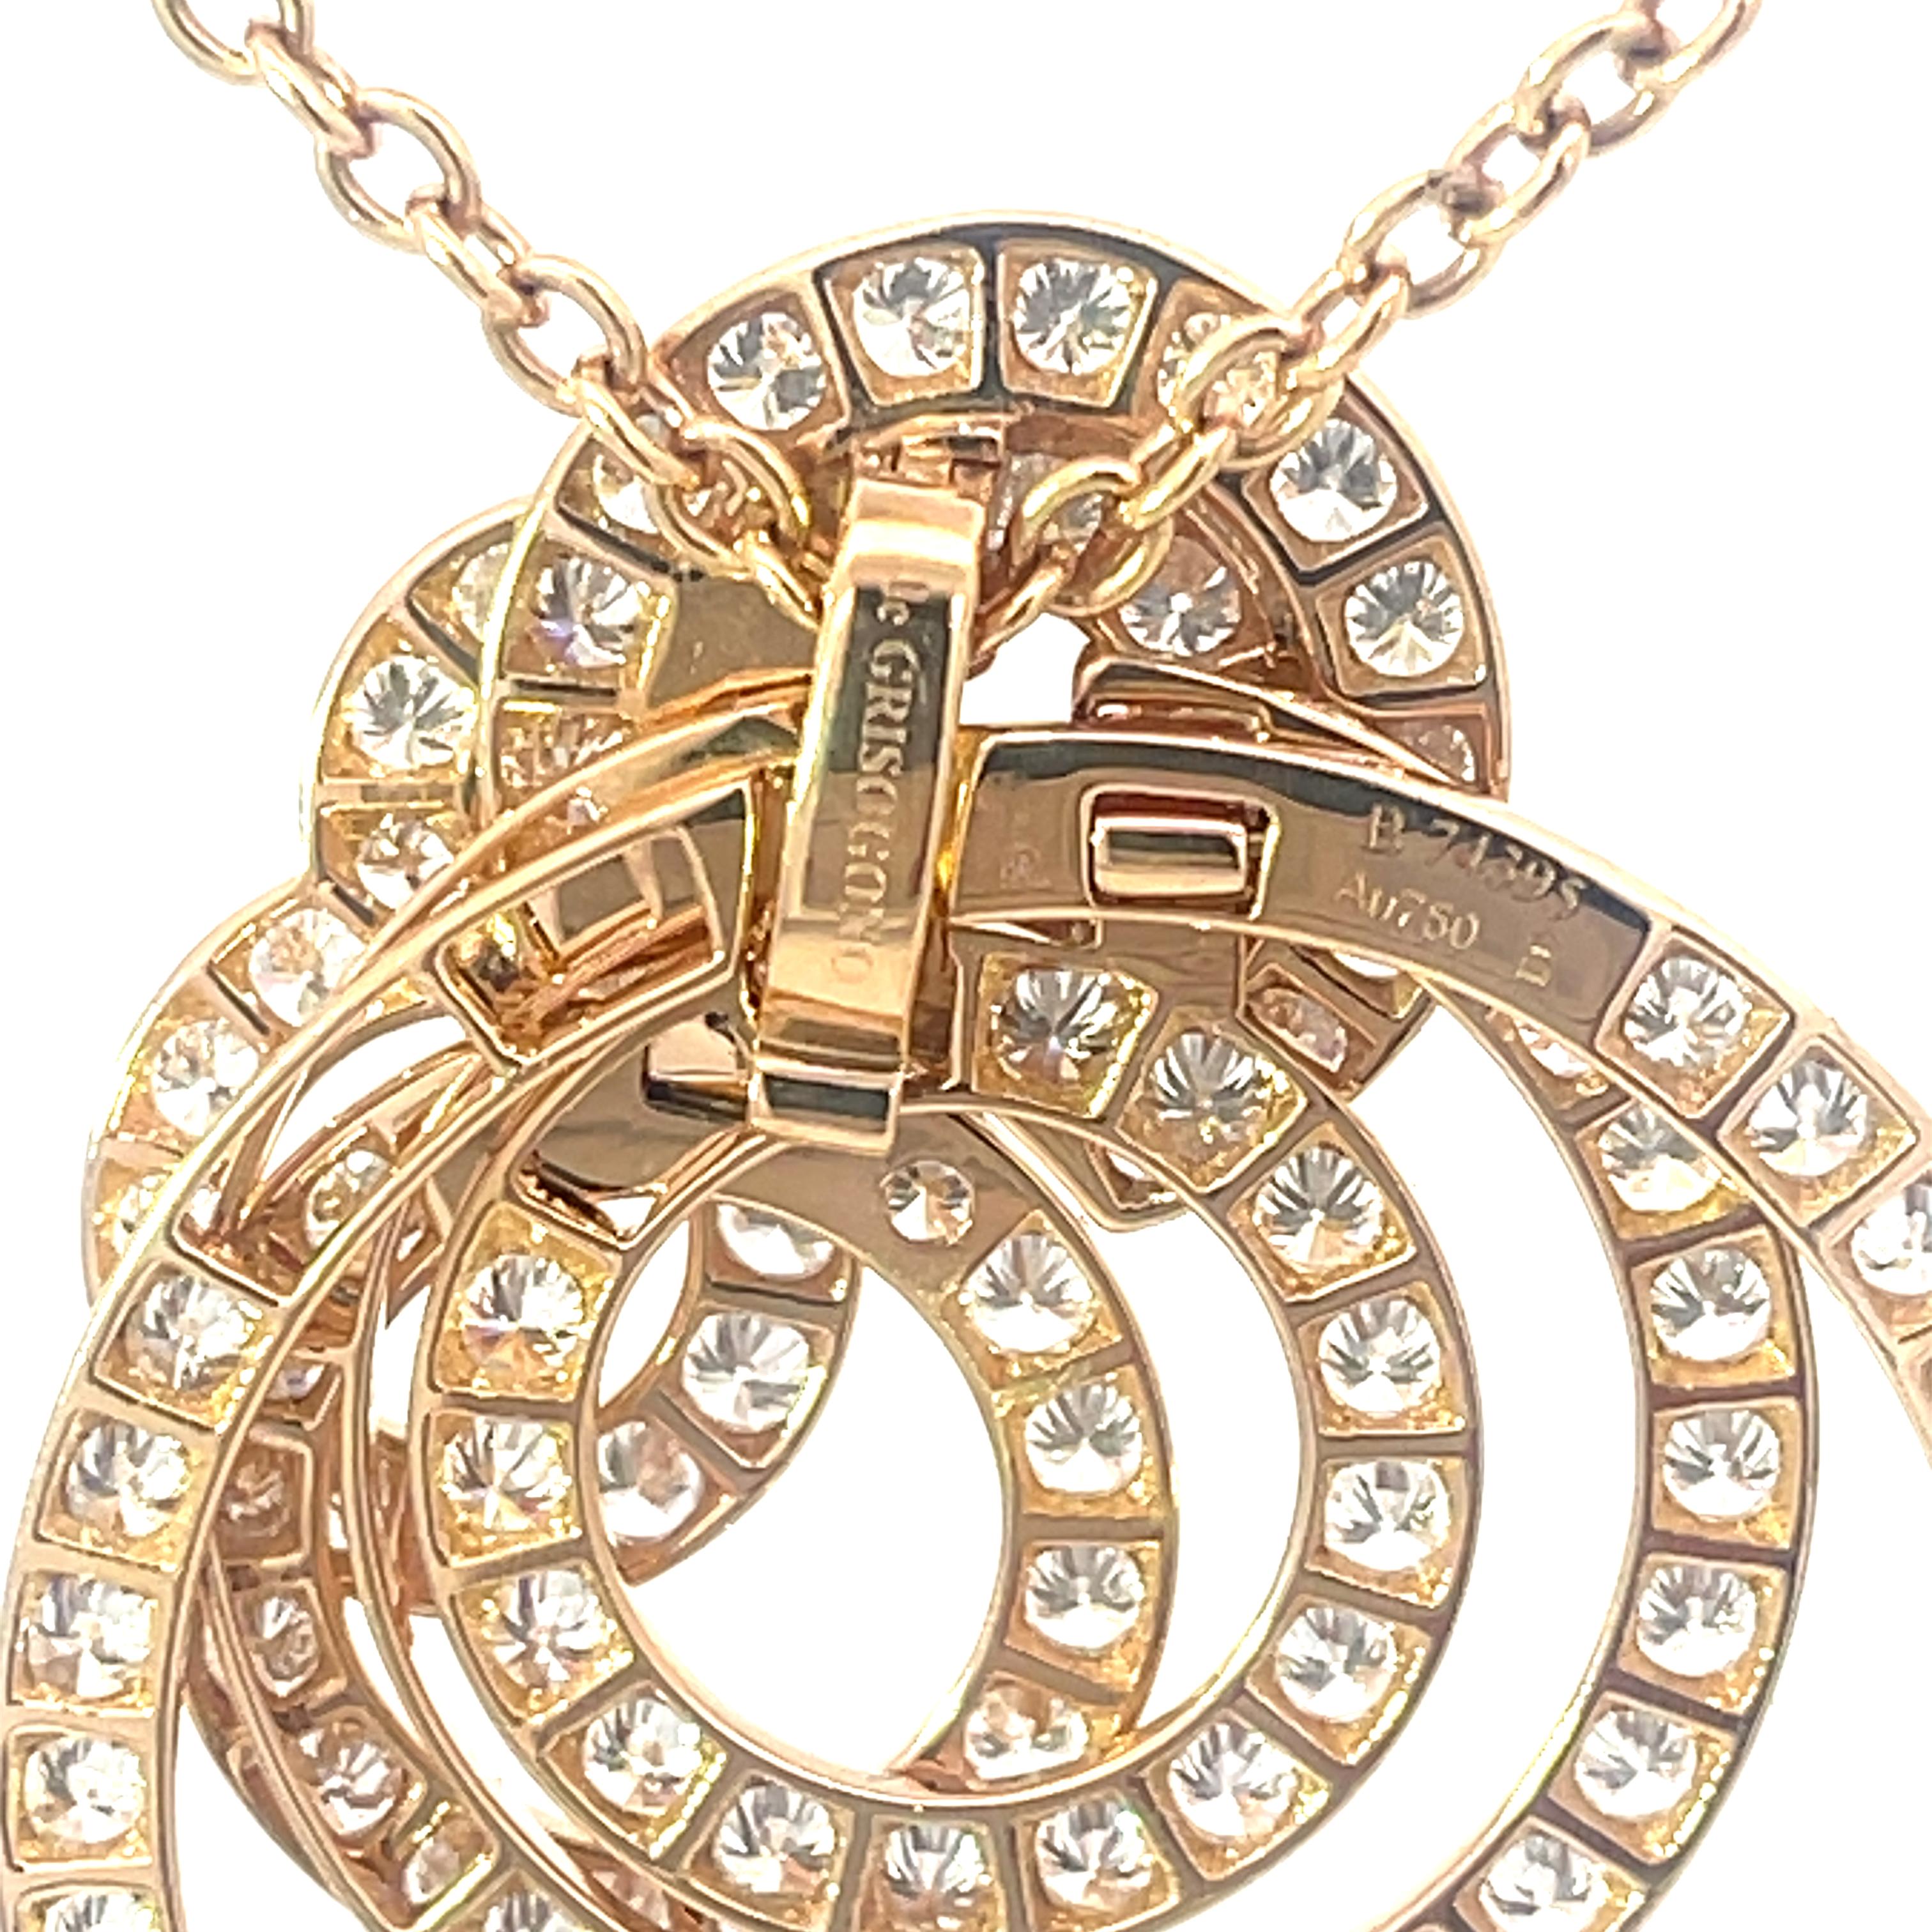 Estate De Grisogono Gypsy Diamond Pendant Necklace in 18K Rose Gold. The pendant features 5.20ctw of brilliant round diamonds, FG color, VVS clarity. On a cable link chain 18